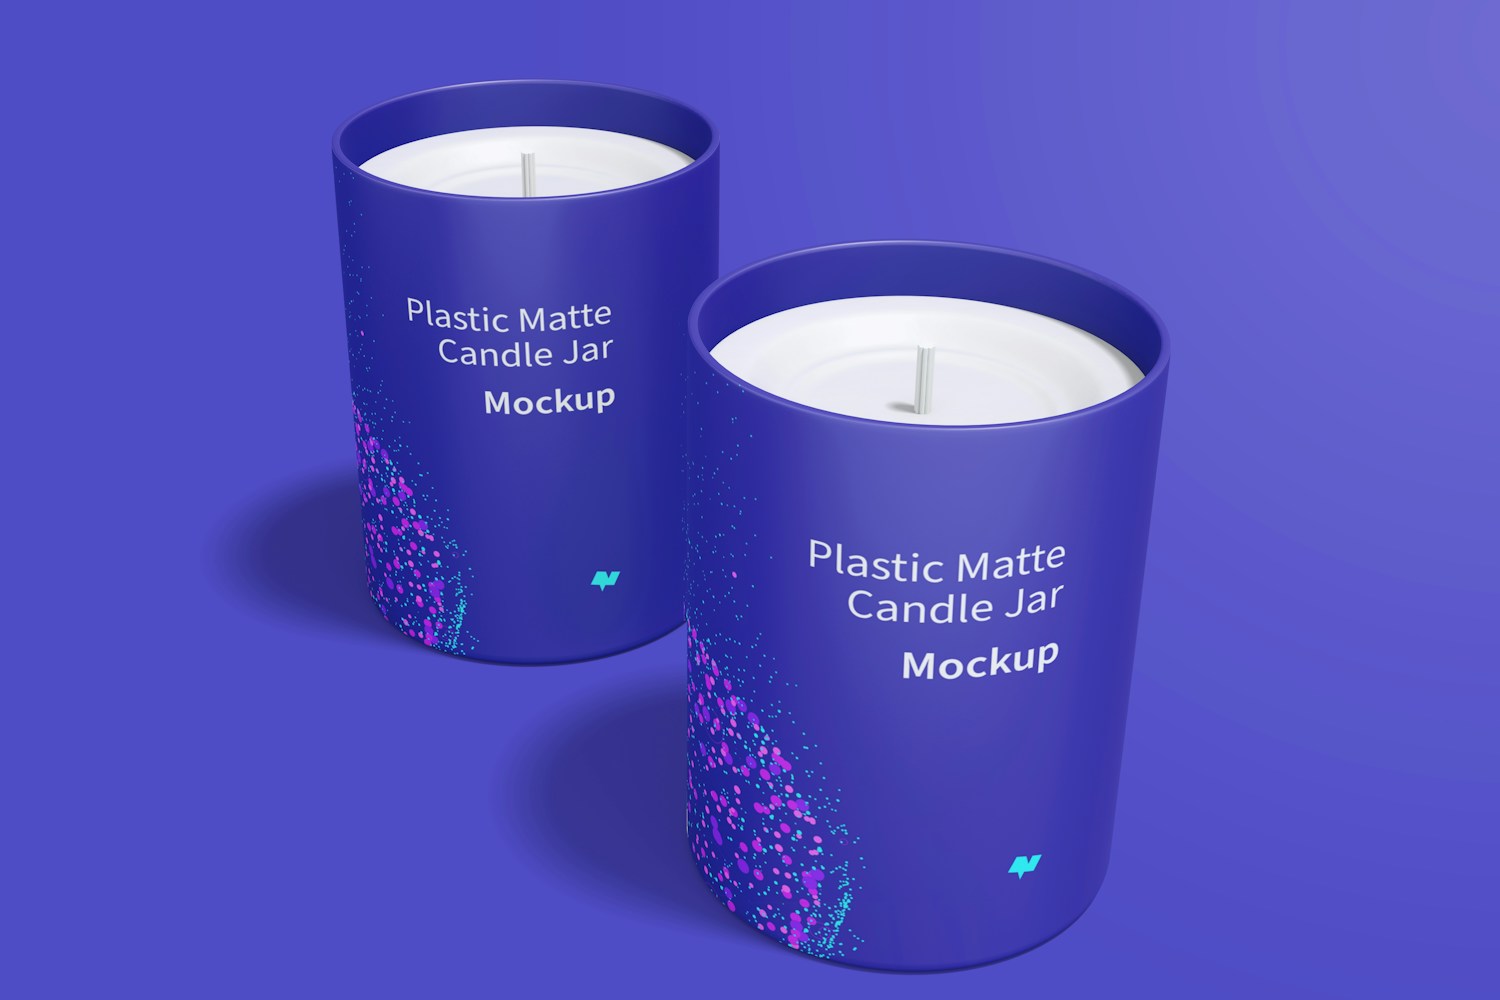 Plastic Matte Candle Jars Mockup, Front View